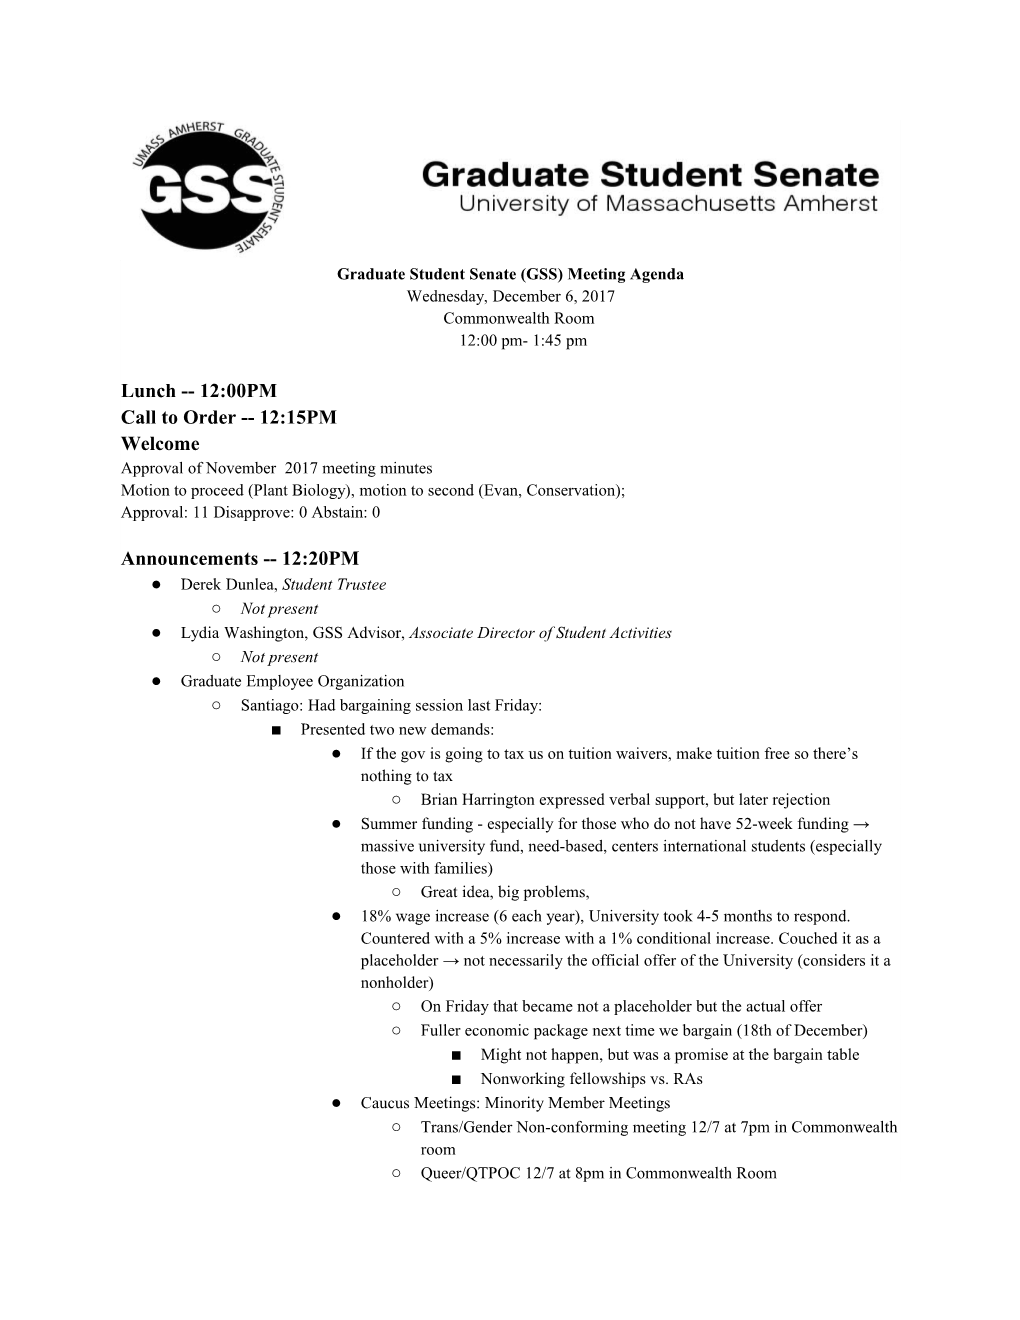 Graduate Student Senate (GSS) Meeting Agenda